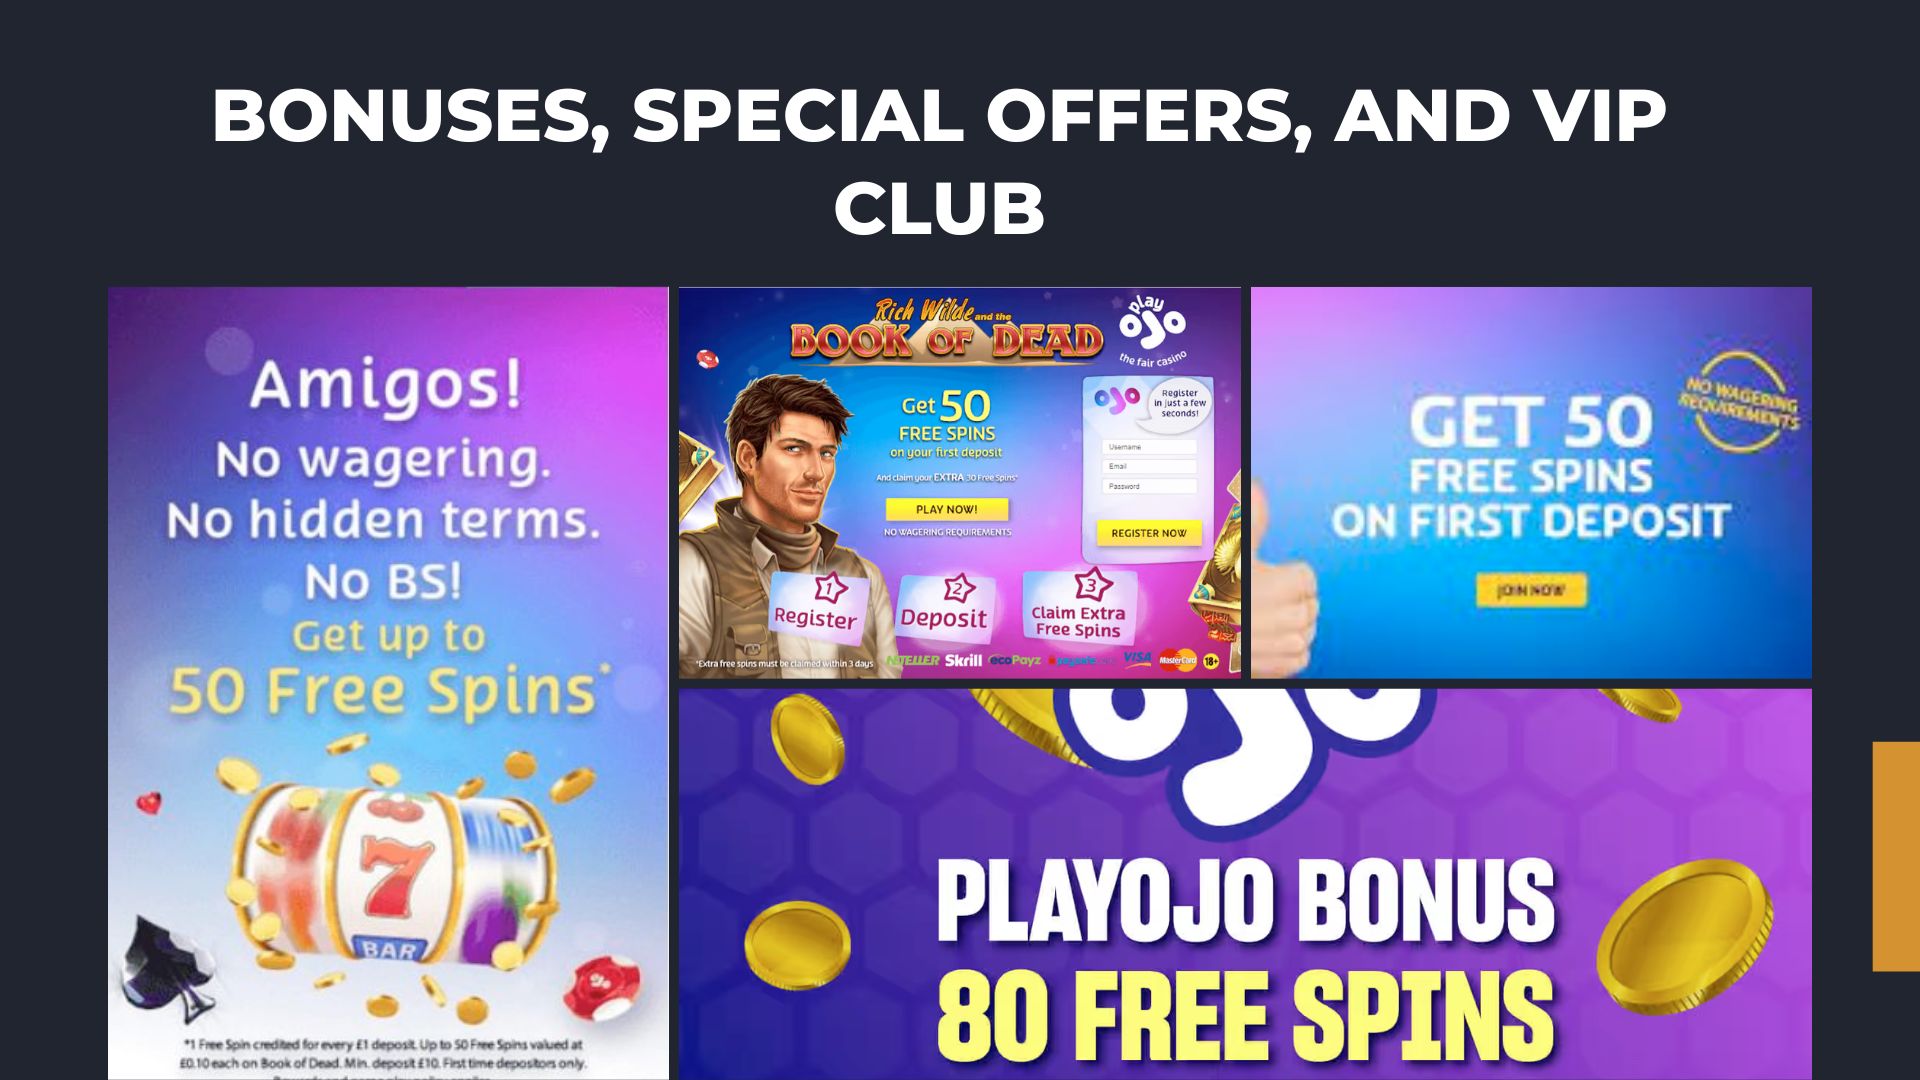 Playojo Bonuses, Special Offers, and VIP Club